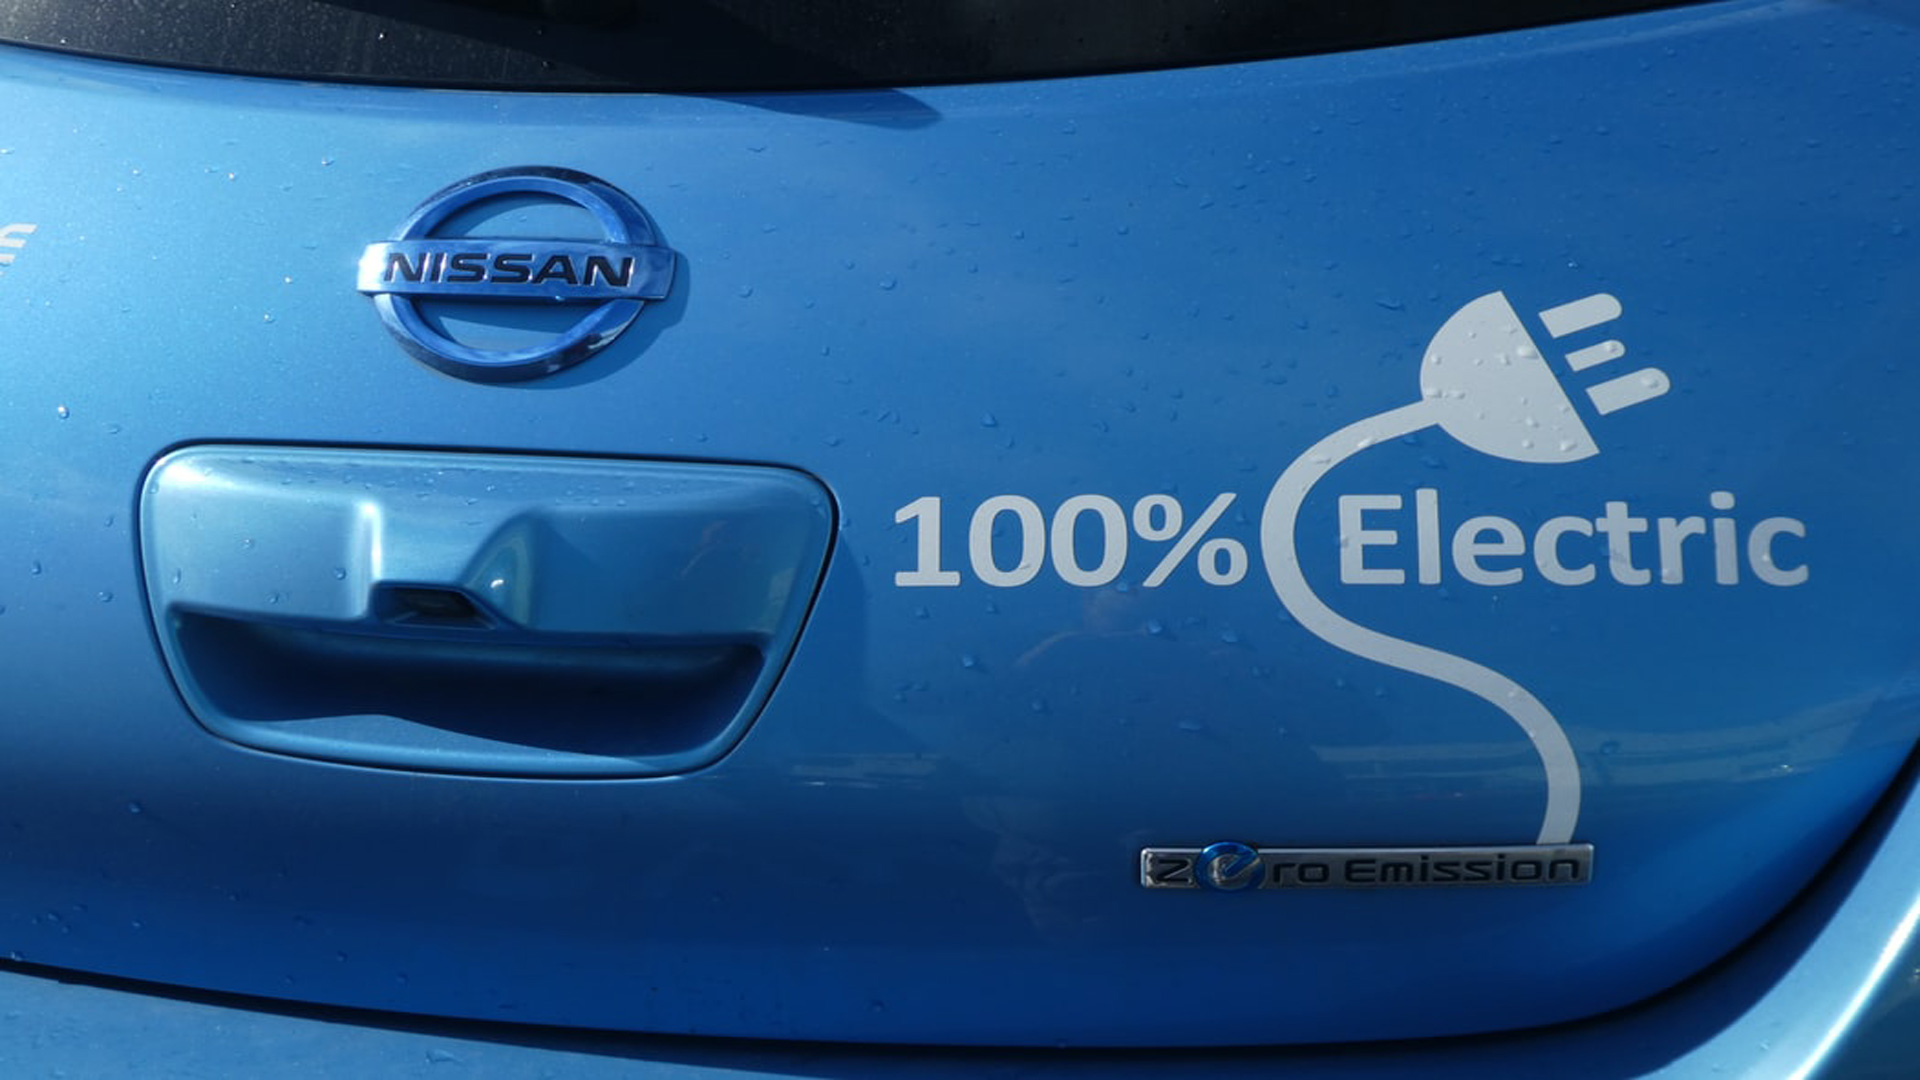 Nissan Leaf in blue